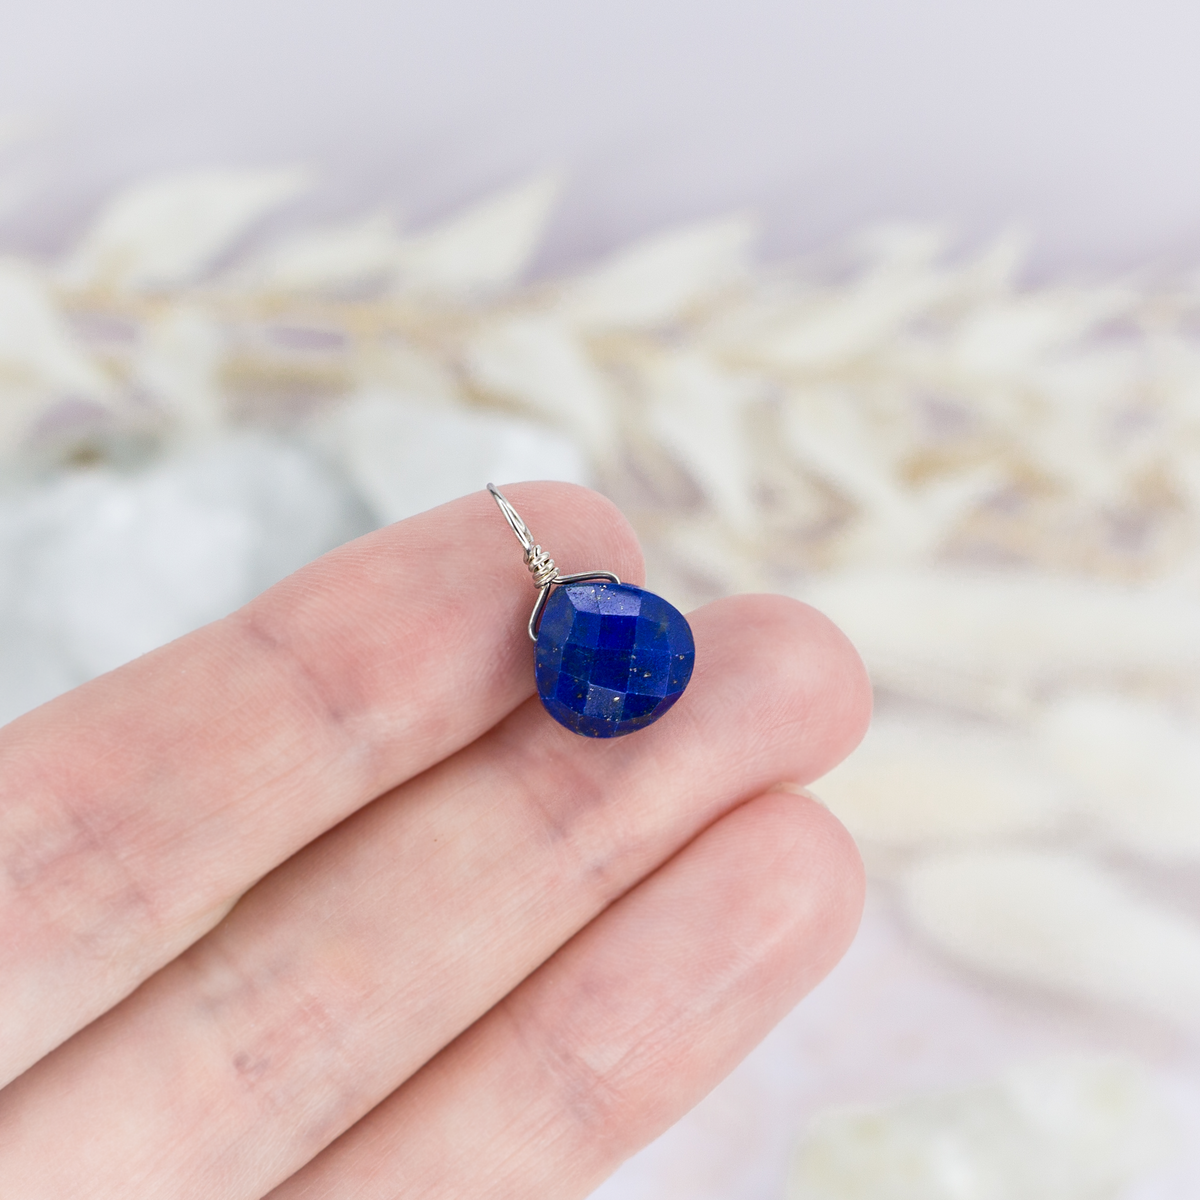 Tiny Lapis Lazuli Teardrop Gemstone Pendant